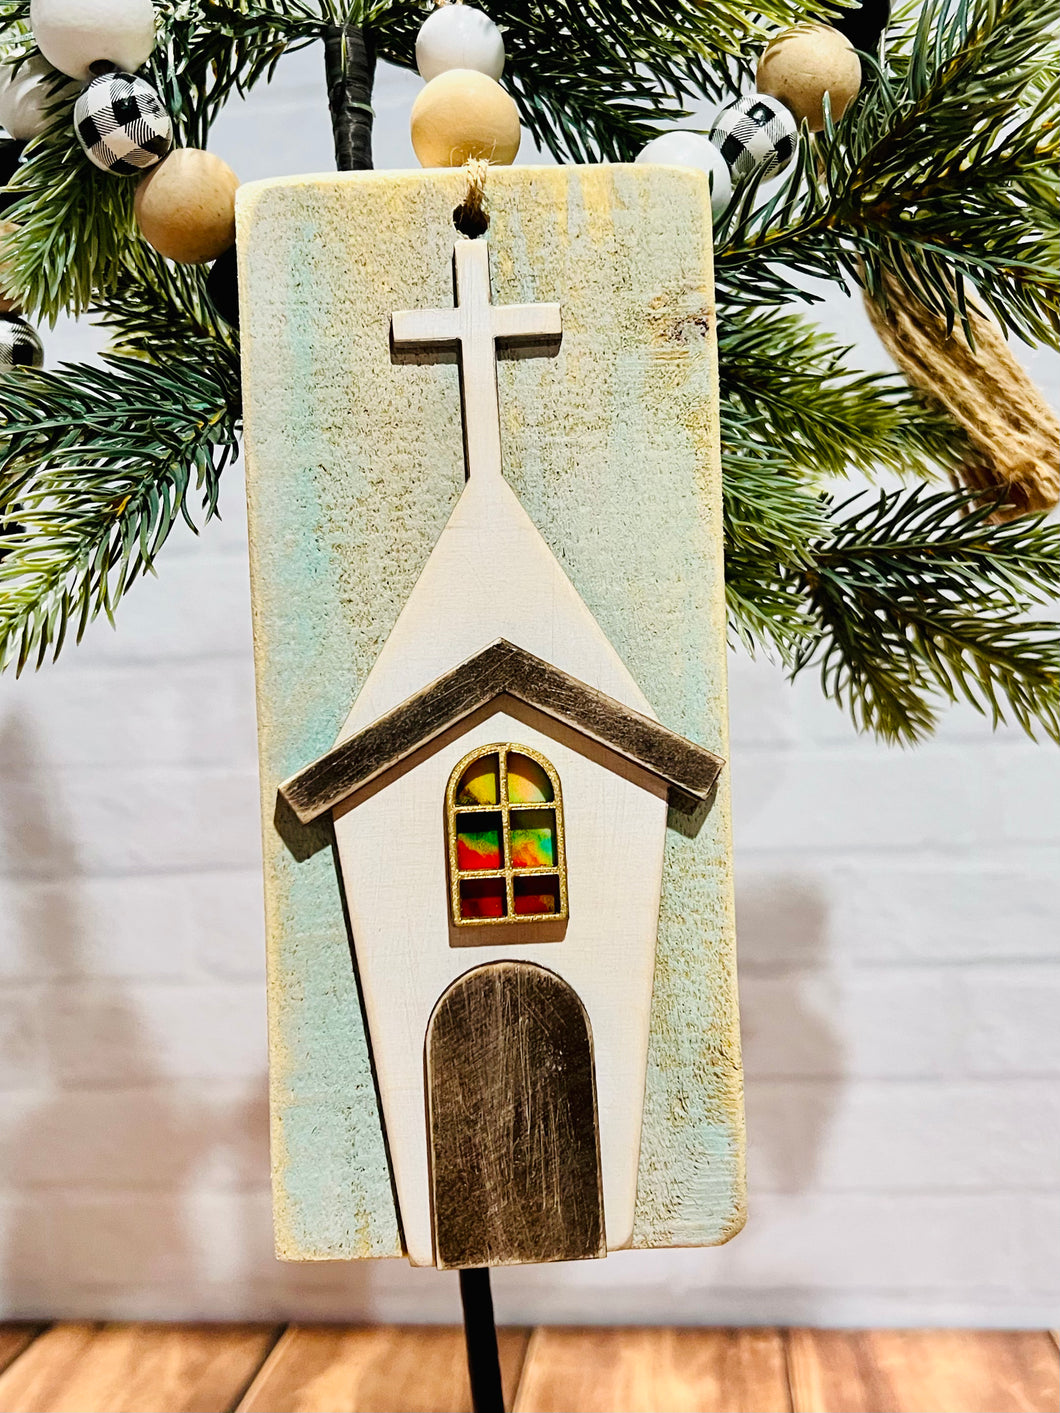 Wooden Church Ornament